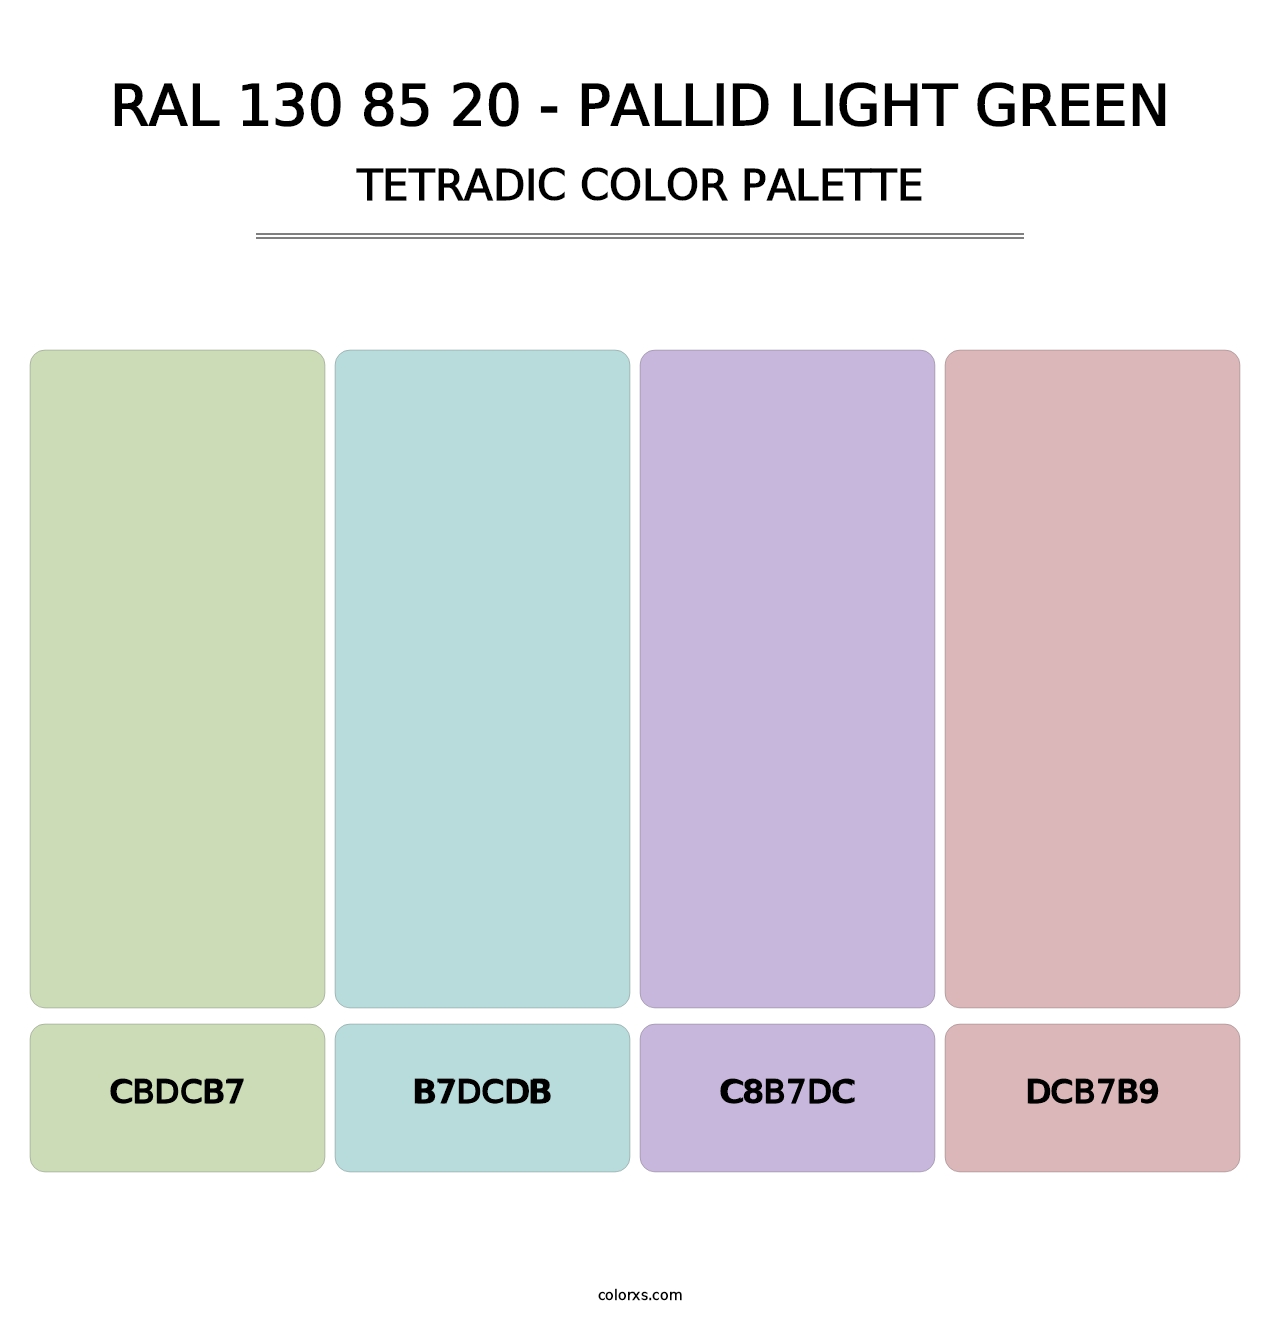 RAL 130 85 20 - Pallid Light Green - Tetradic Color Palette